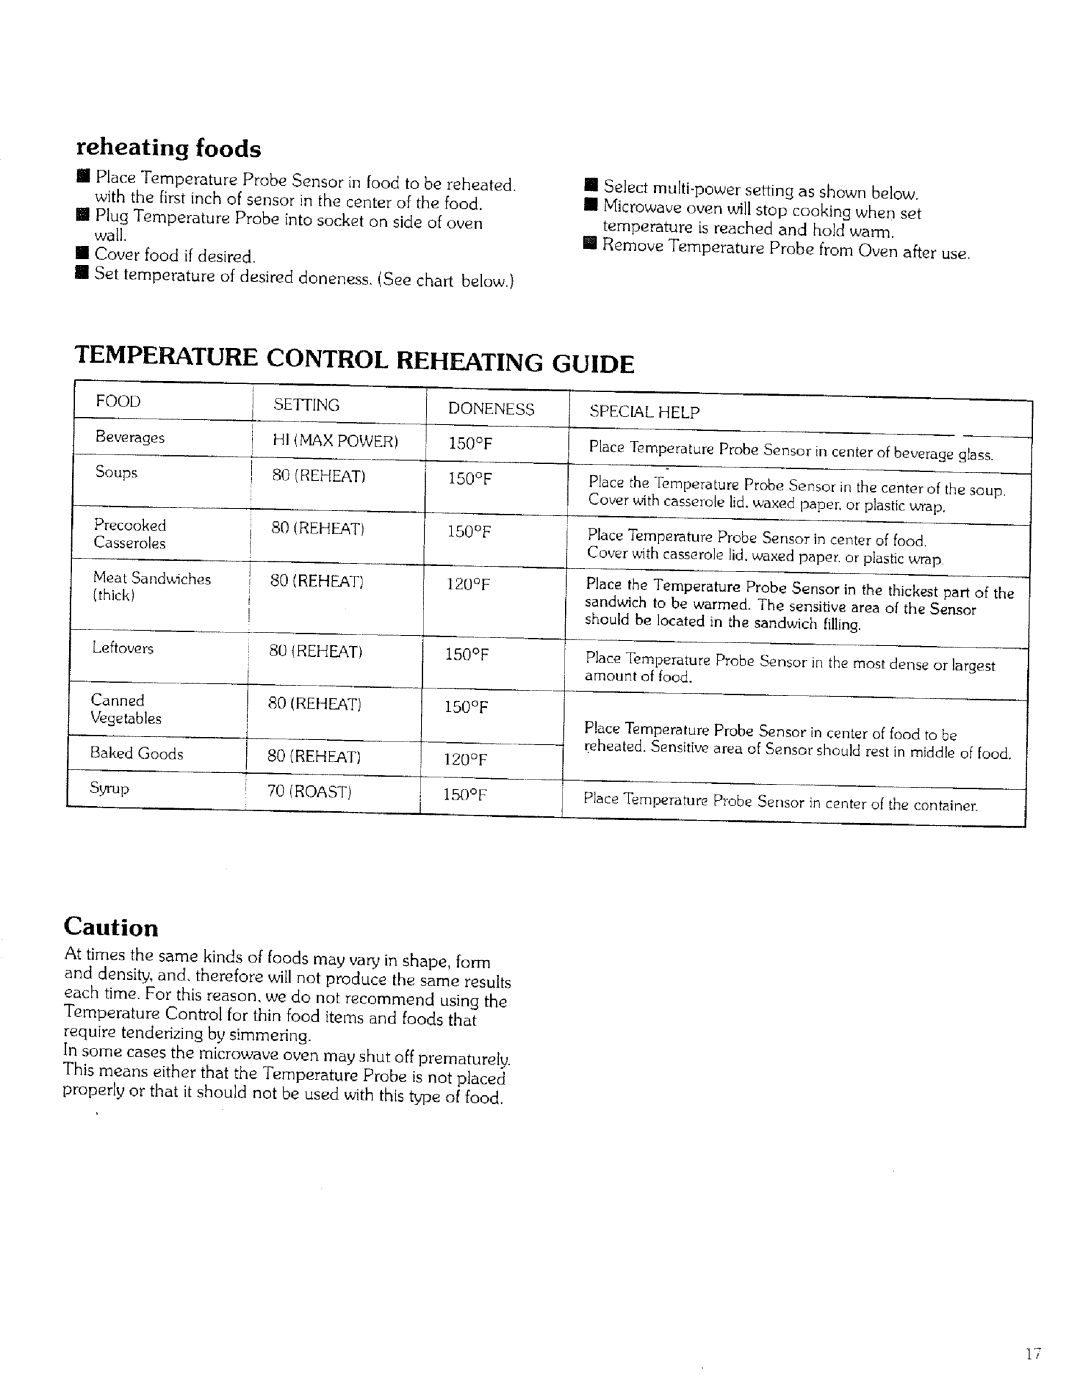 Kenmore 99721 manual reheating foods, Temperature, Control Reheating, Guide 